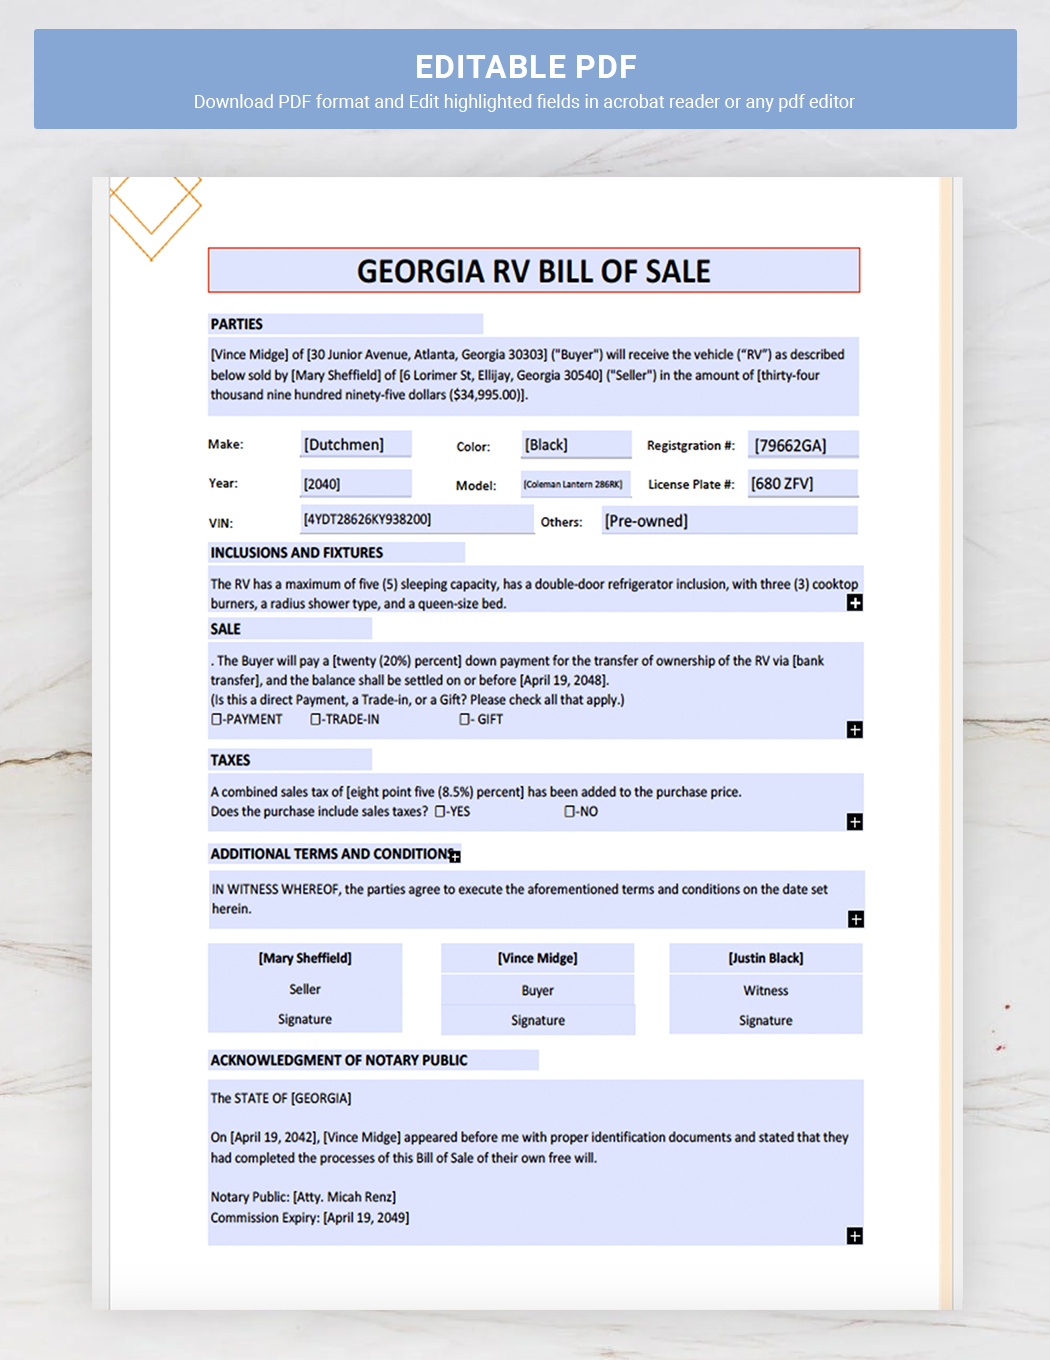 Georgia RV Bill of Sale Template